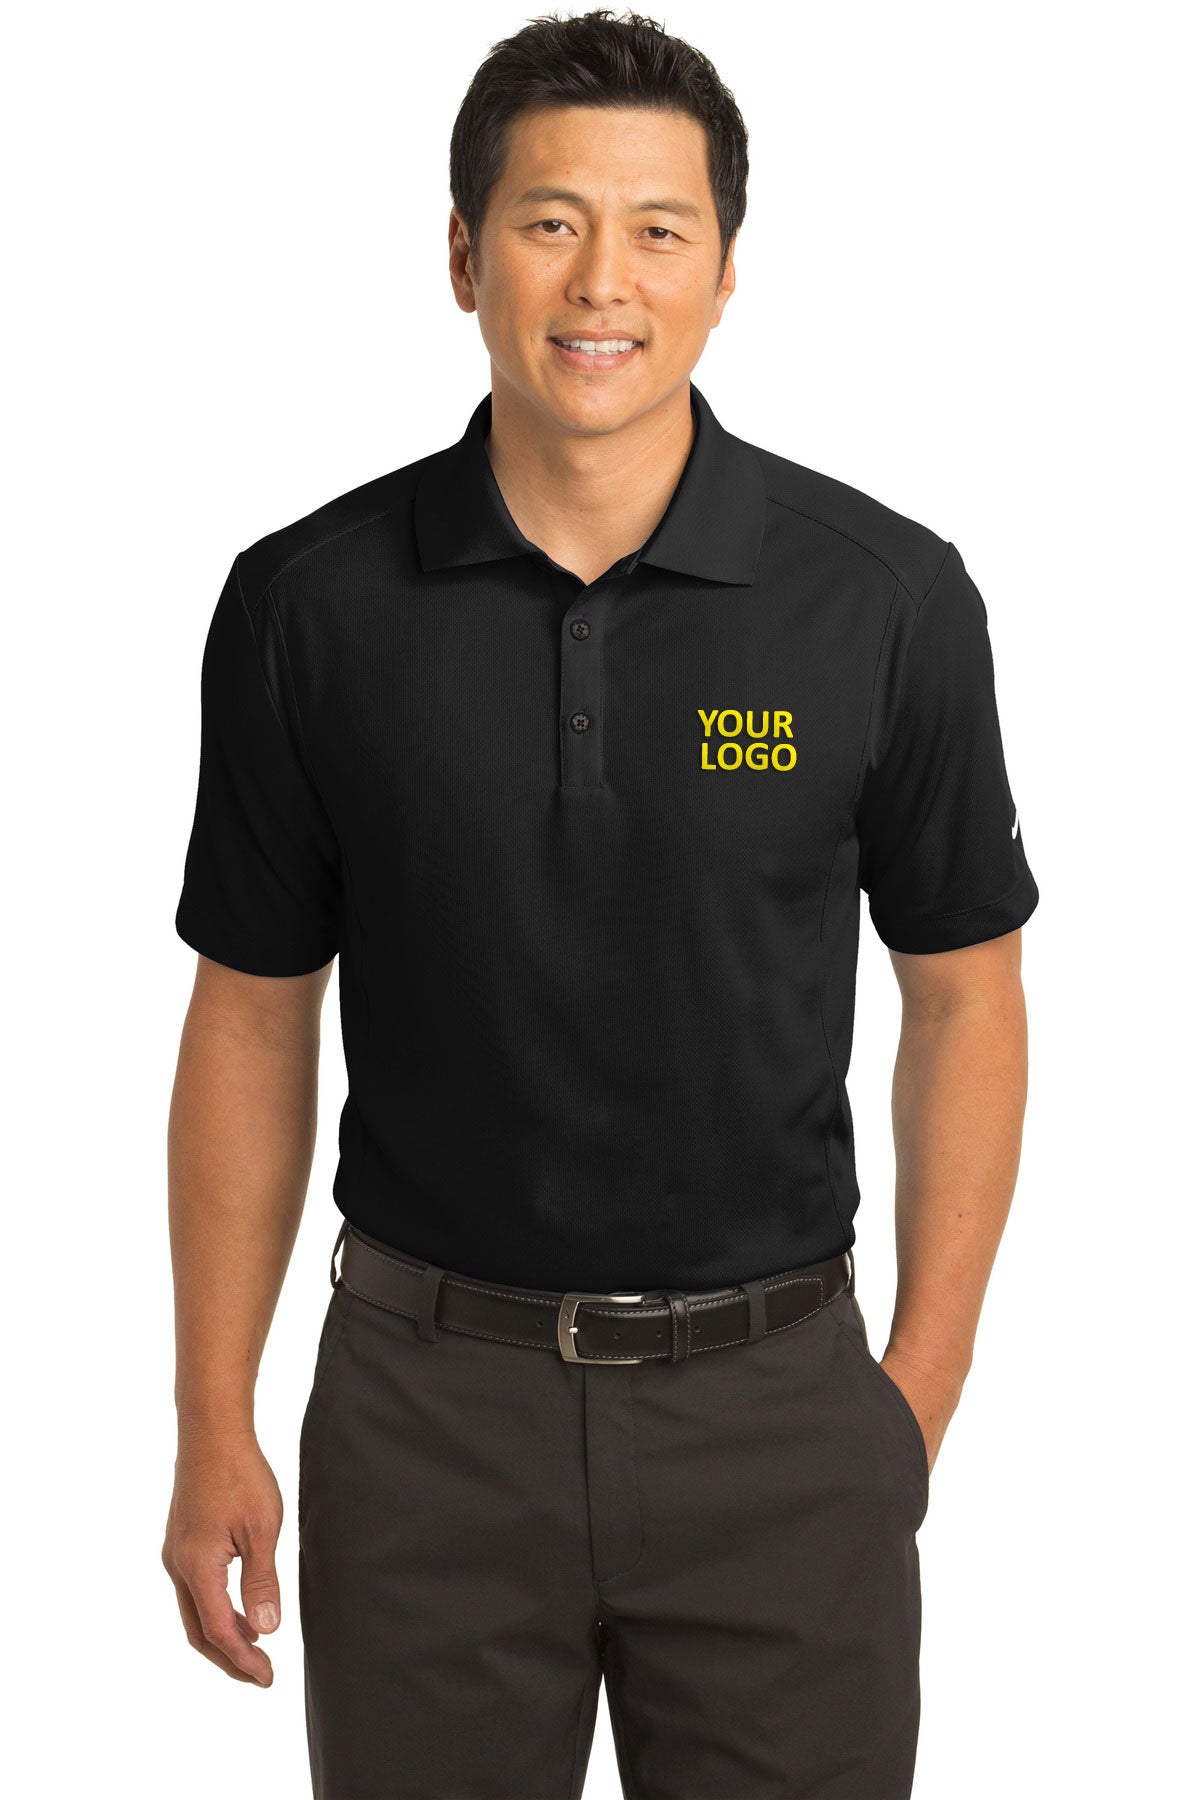 nike black 267020 polo shirts with logos